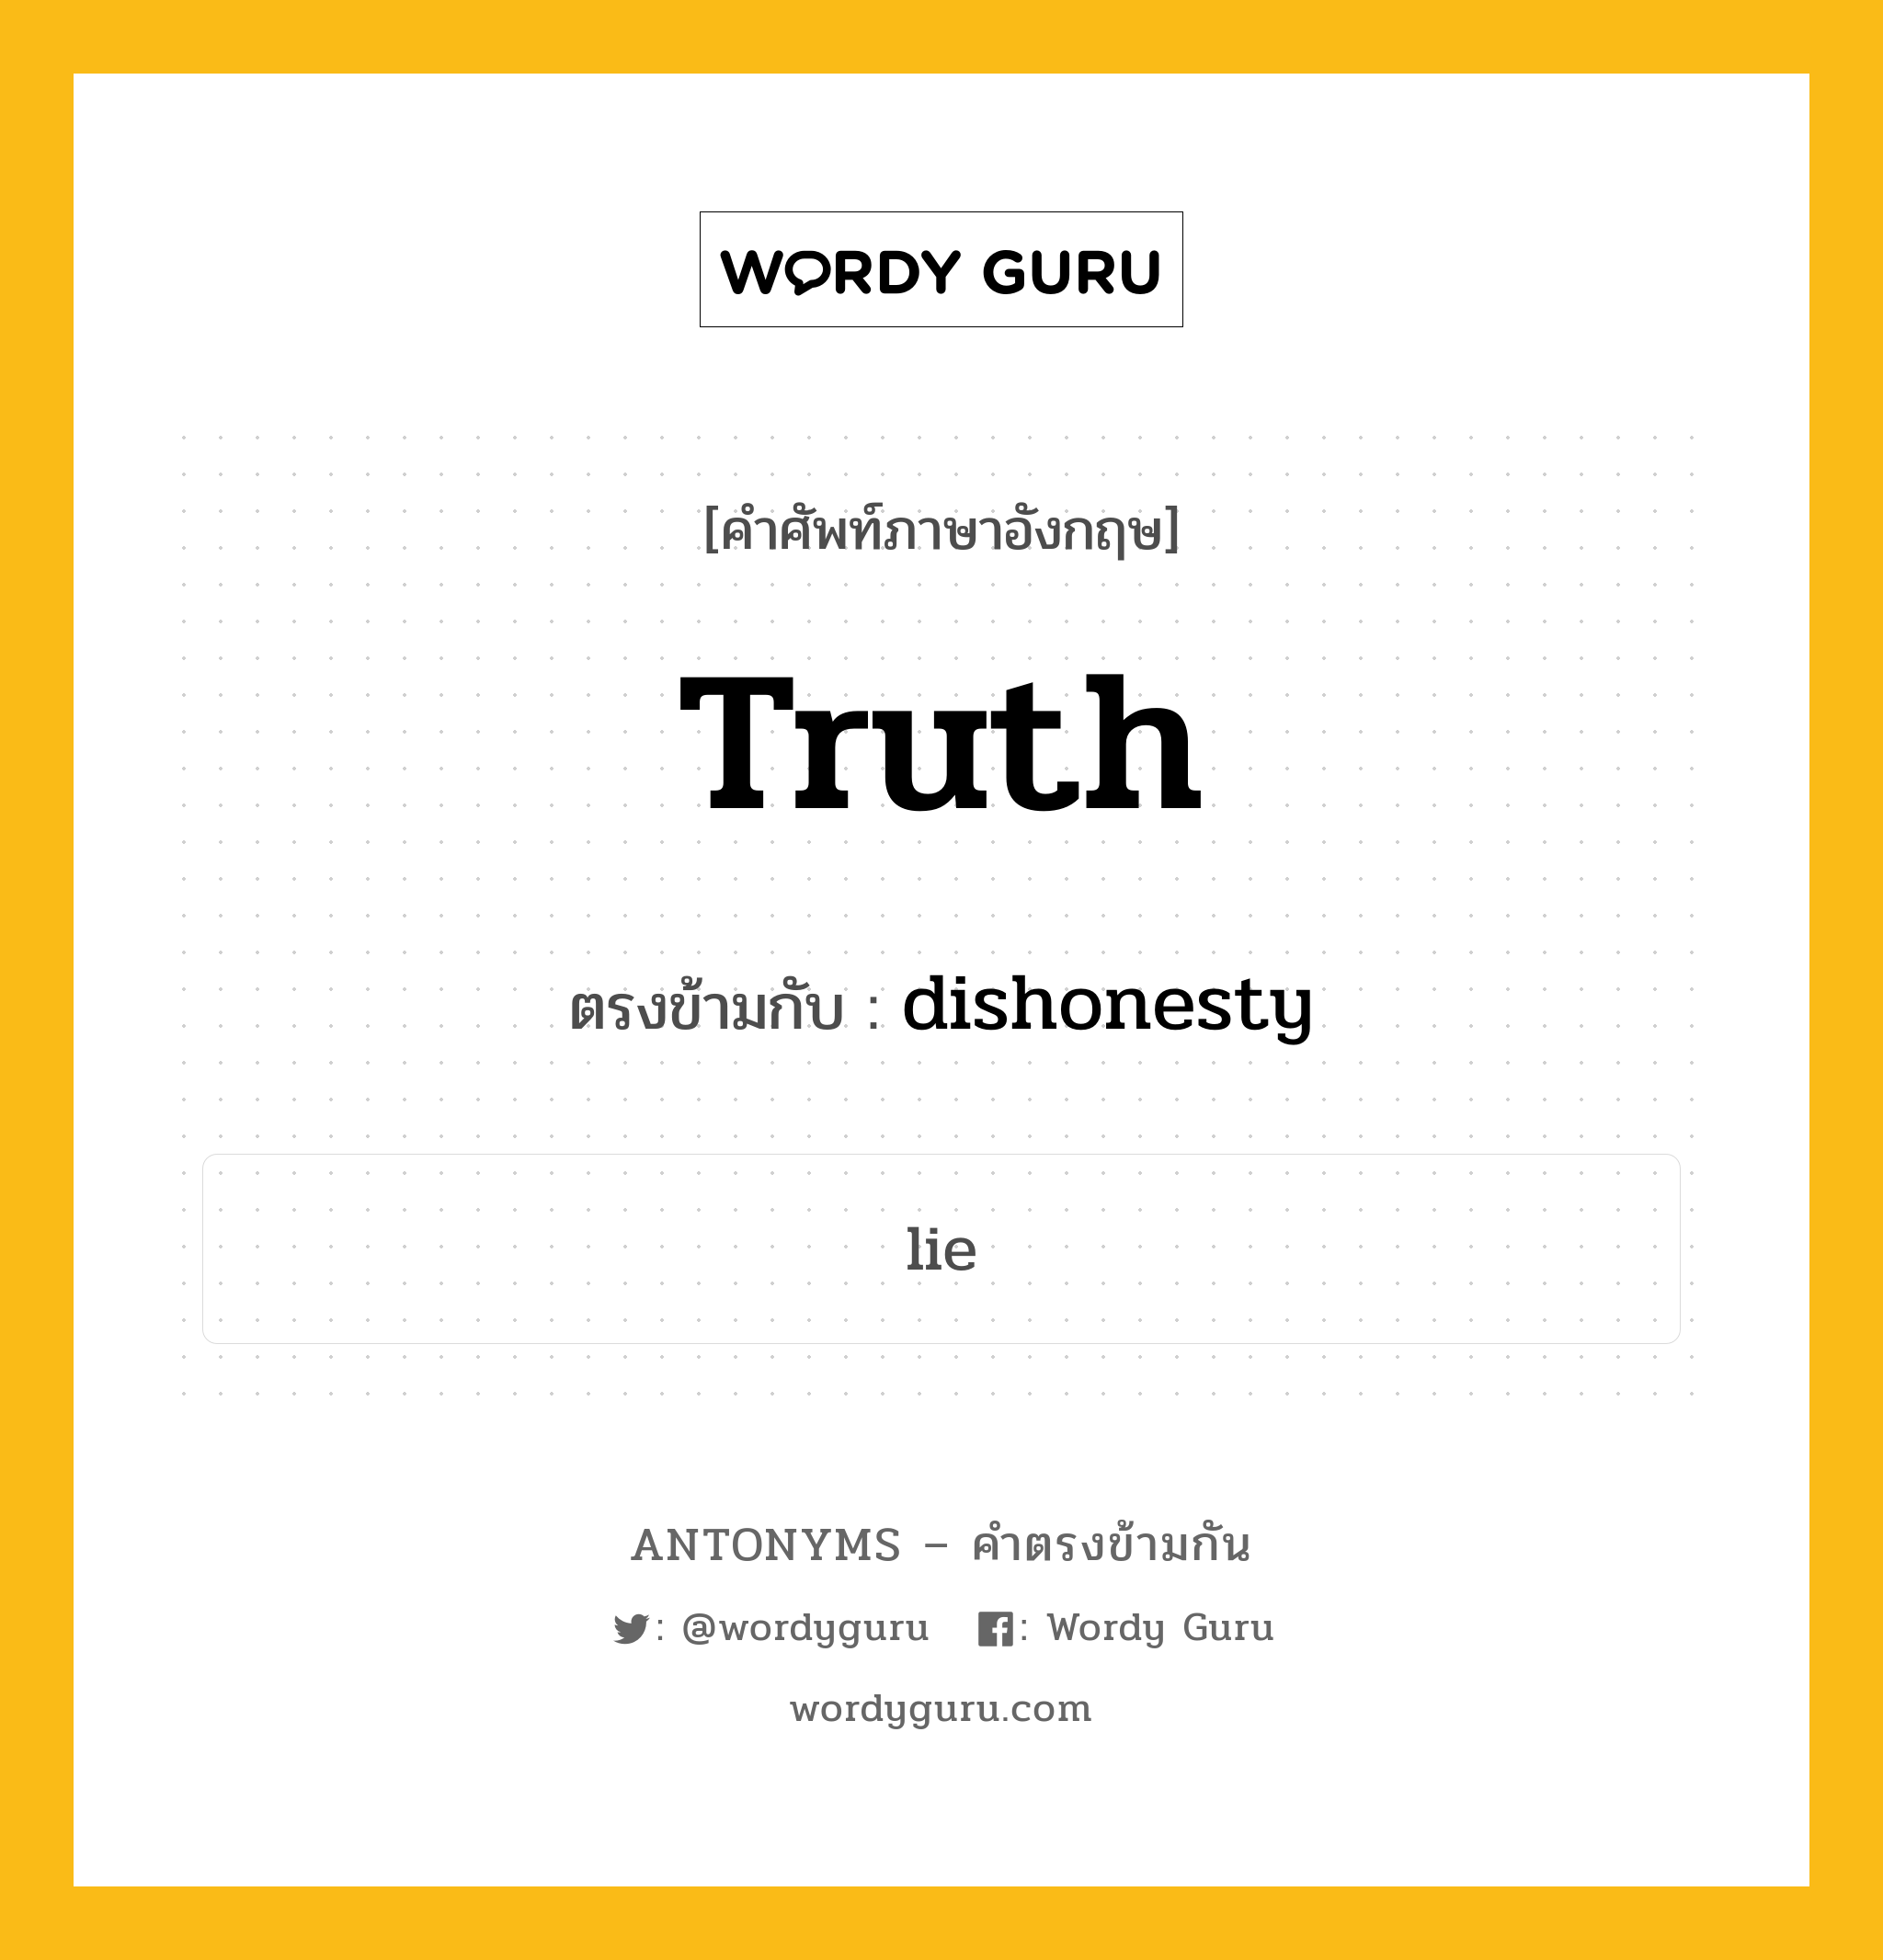 truth เป็นคำตรงข้ามกับคำไหนบ้าง?, คำศัพท์ภาษาอังกฤษ truth ตรงข้ามกับ dishonesty หมวด dishonesty